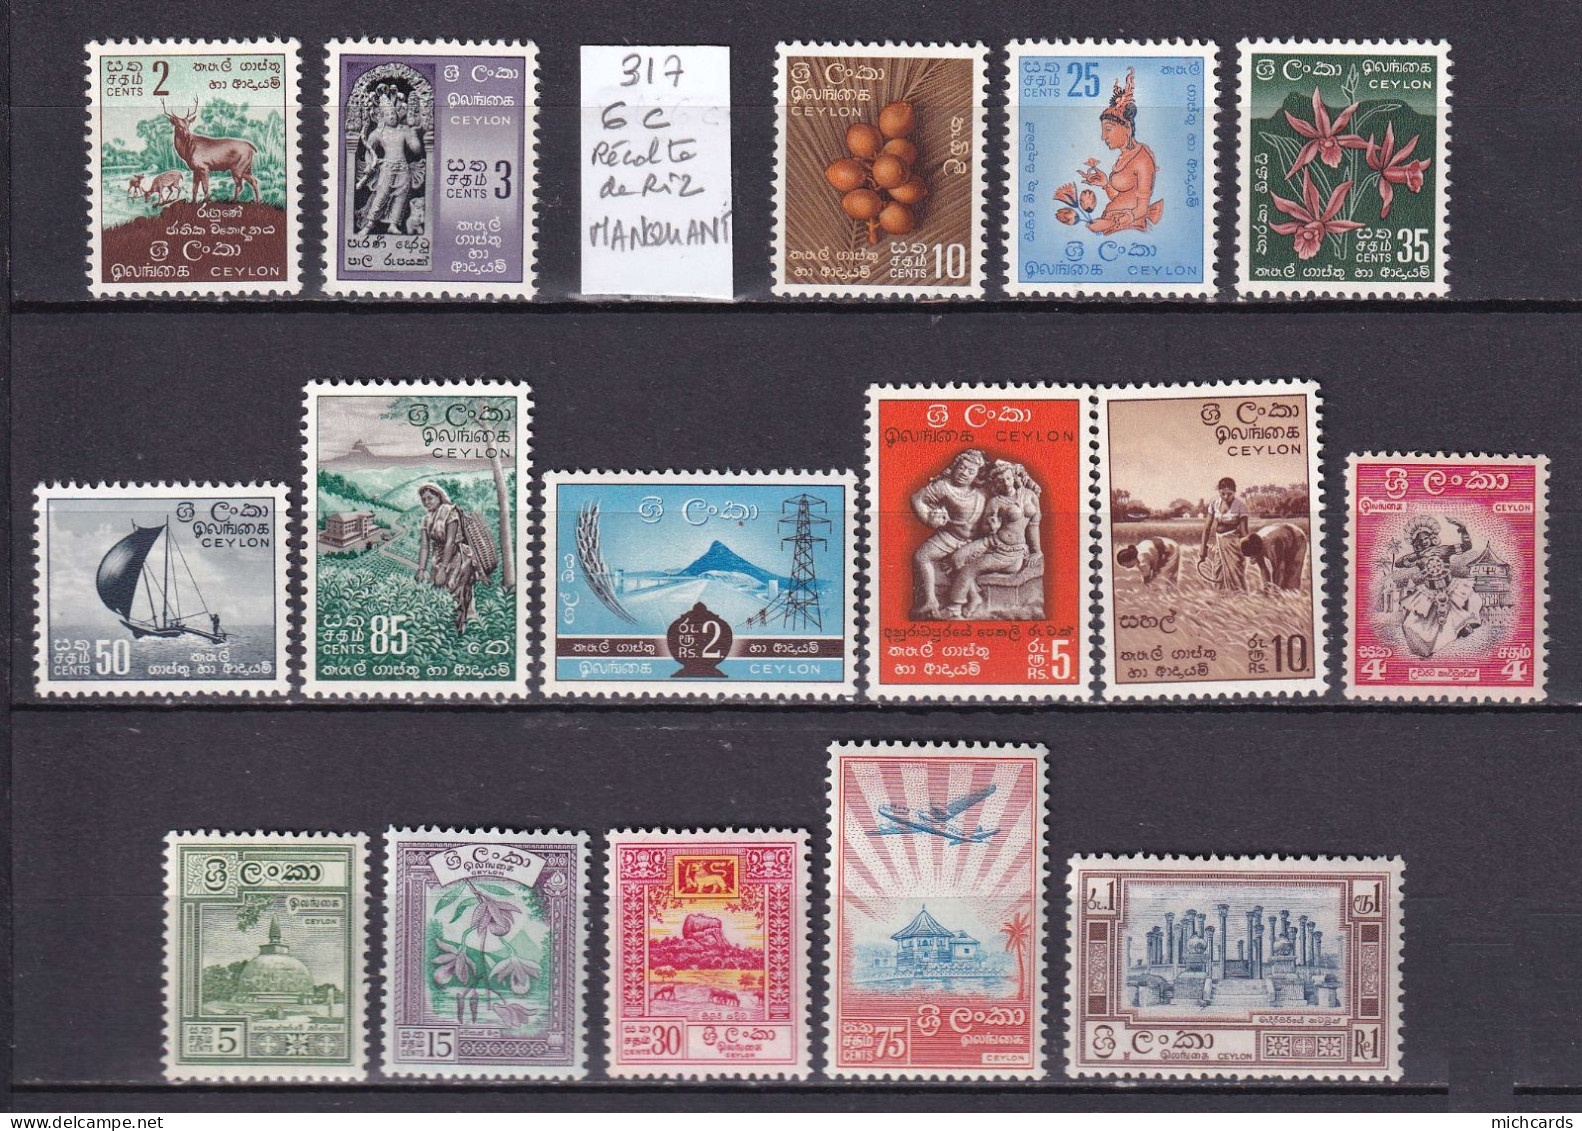 264 - CEYLAN 1958/59 - Y&T 315/28 Manque Le 6c (317) - Serie Courante - Neuf **(MNH) Sans Charniere - Sri Lanka (Ceilán) (1948-...)